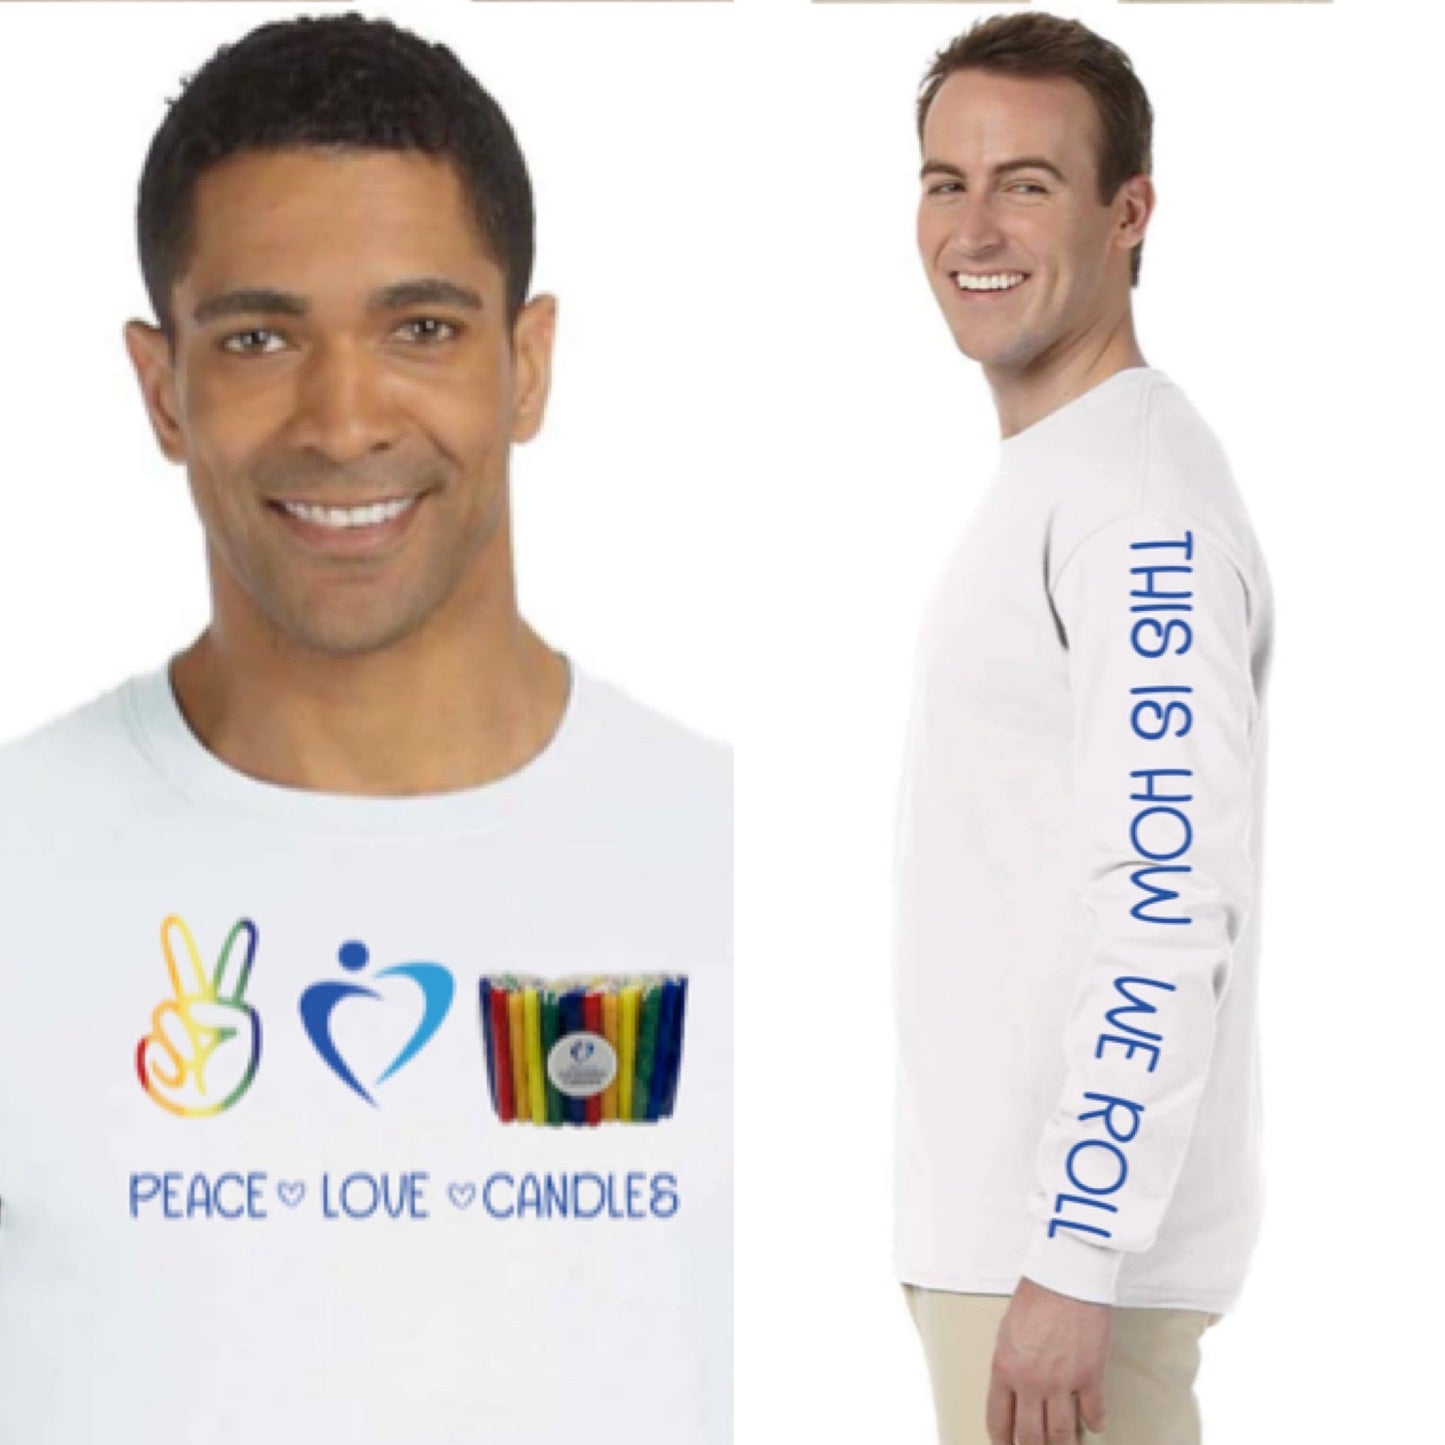 PEACE~LOVE~CANDLES  Short Sleeve T-shirt